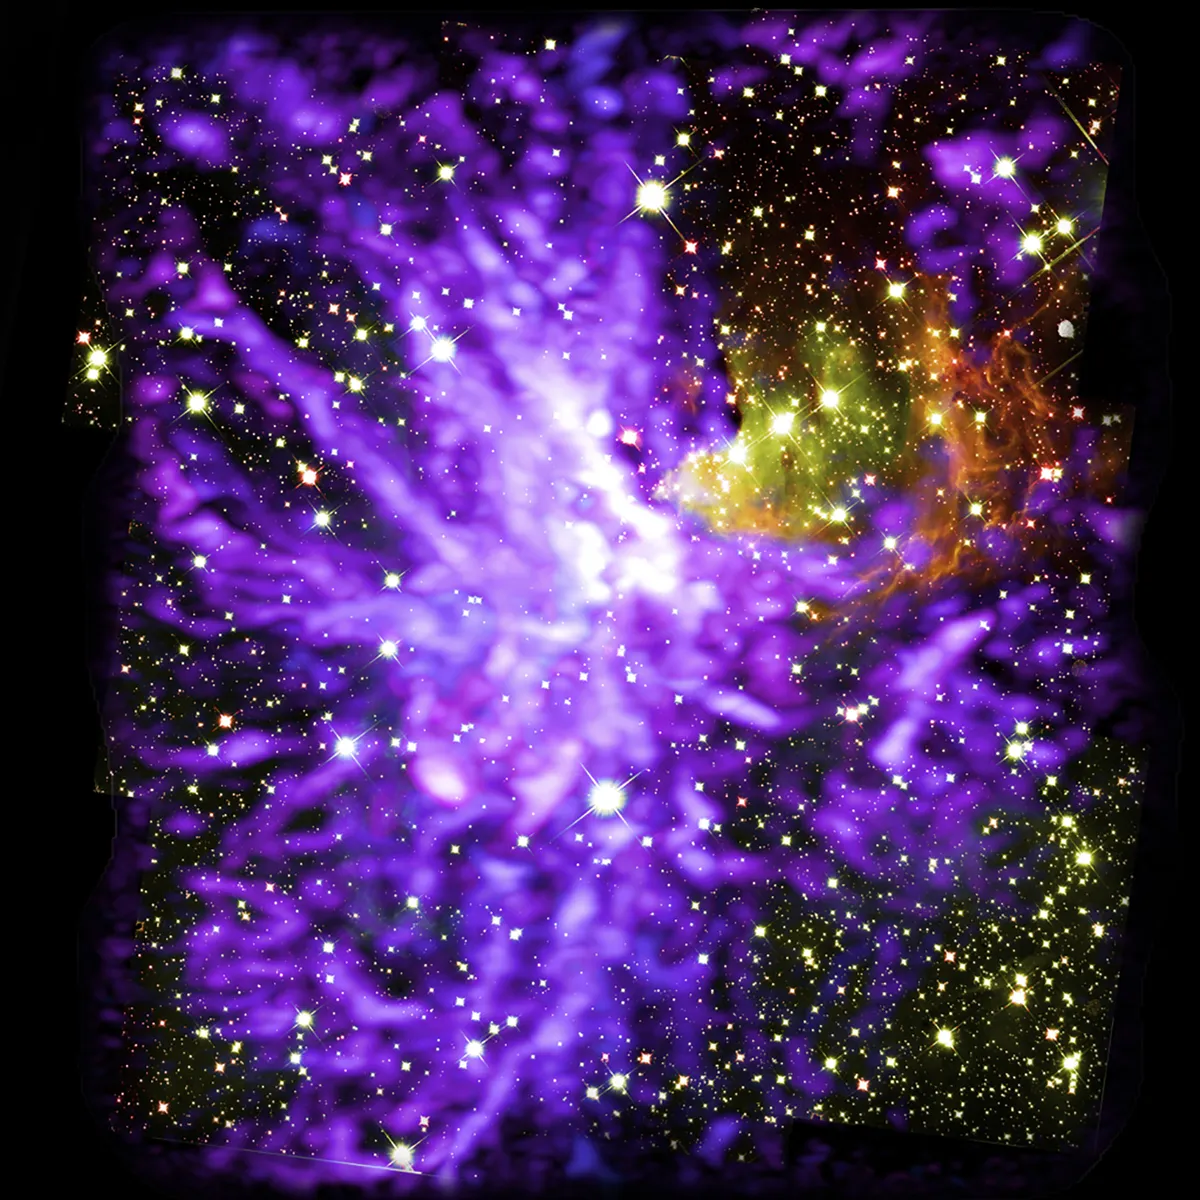 G286.21 0.17. Image credit ALMA (ESO/NAOJ/NRAO), Y. Cheng et al.; NRAO/AUI/NSF, S. Dagnello; NASA/ESA Hubble